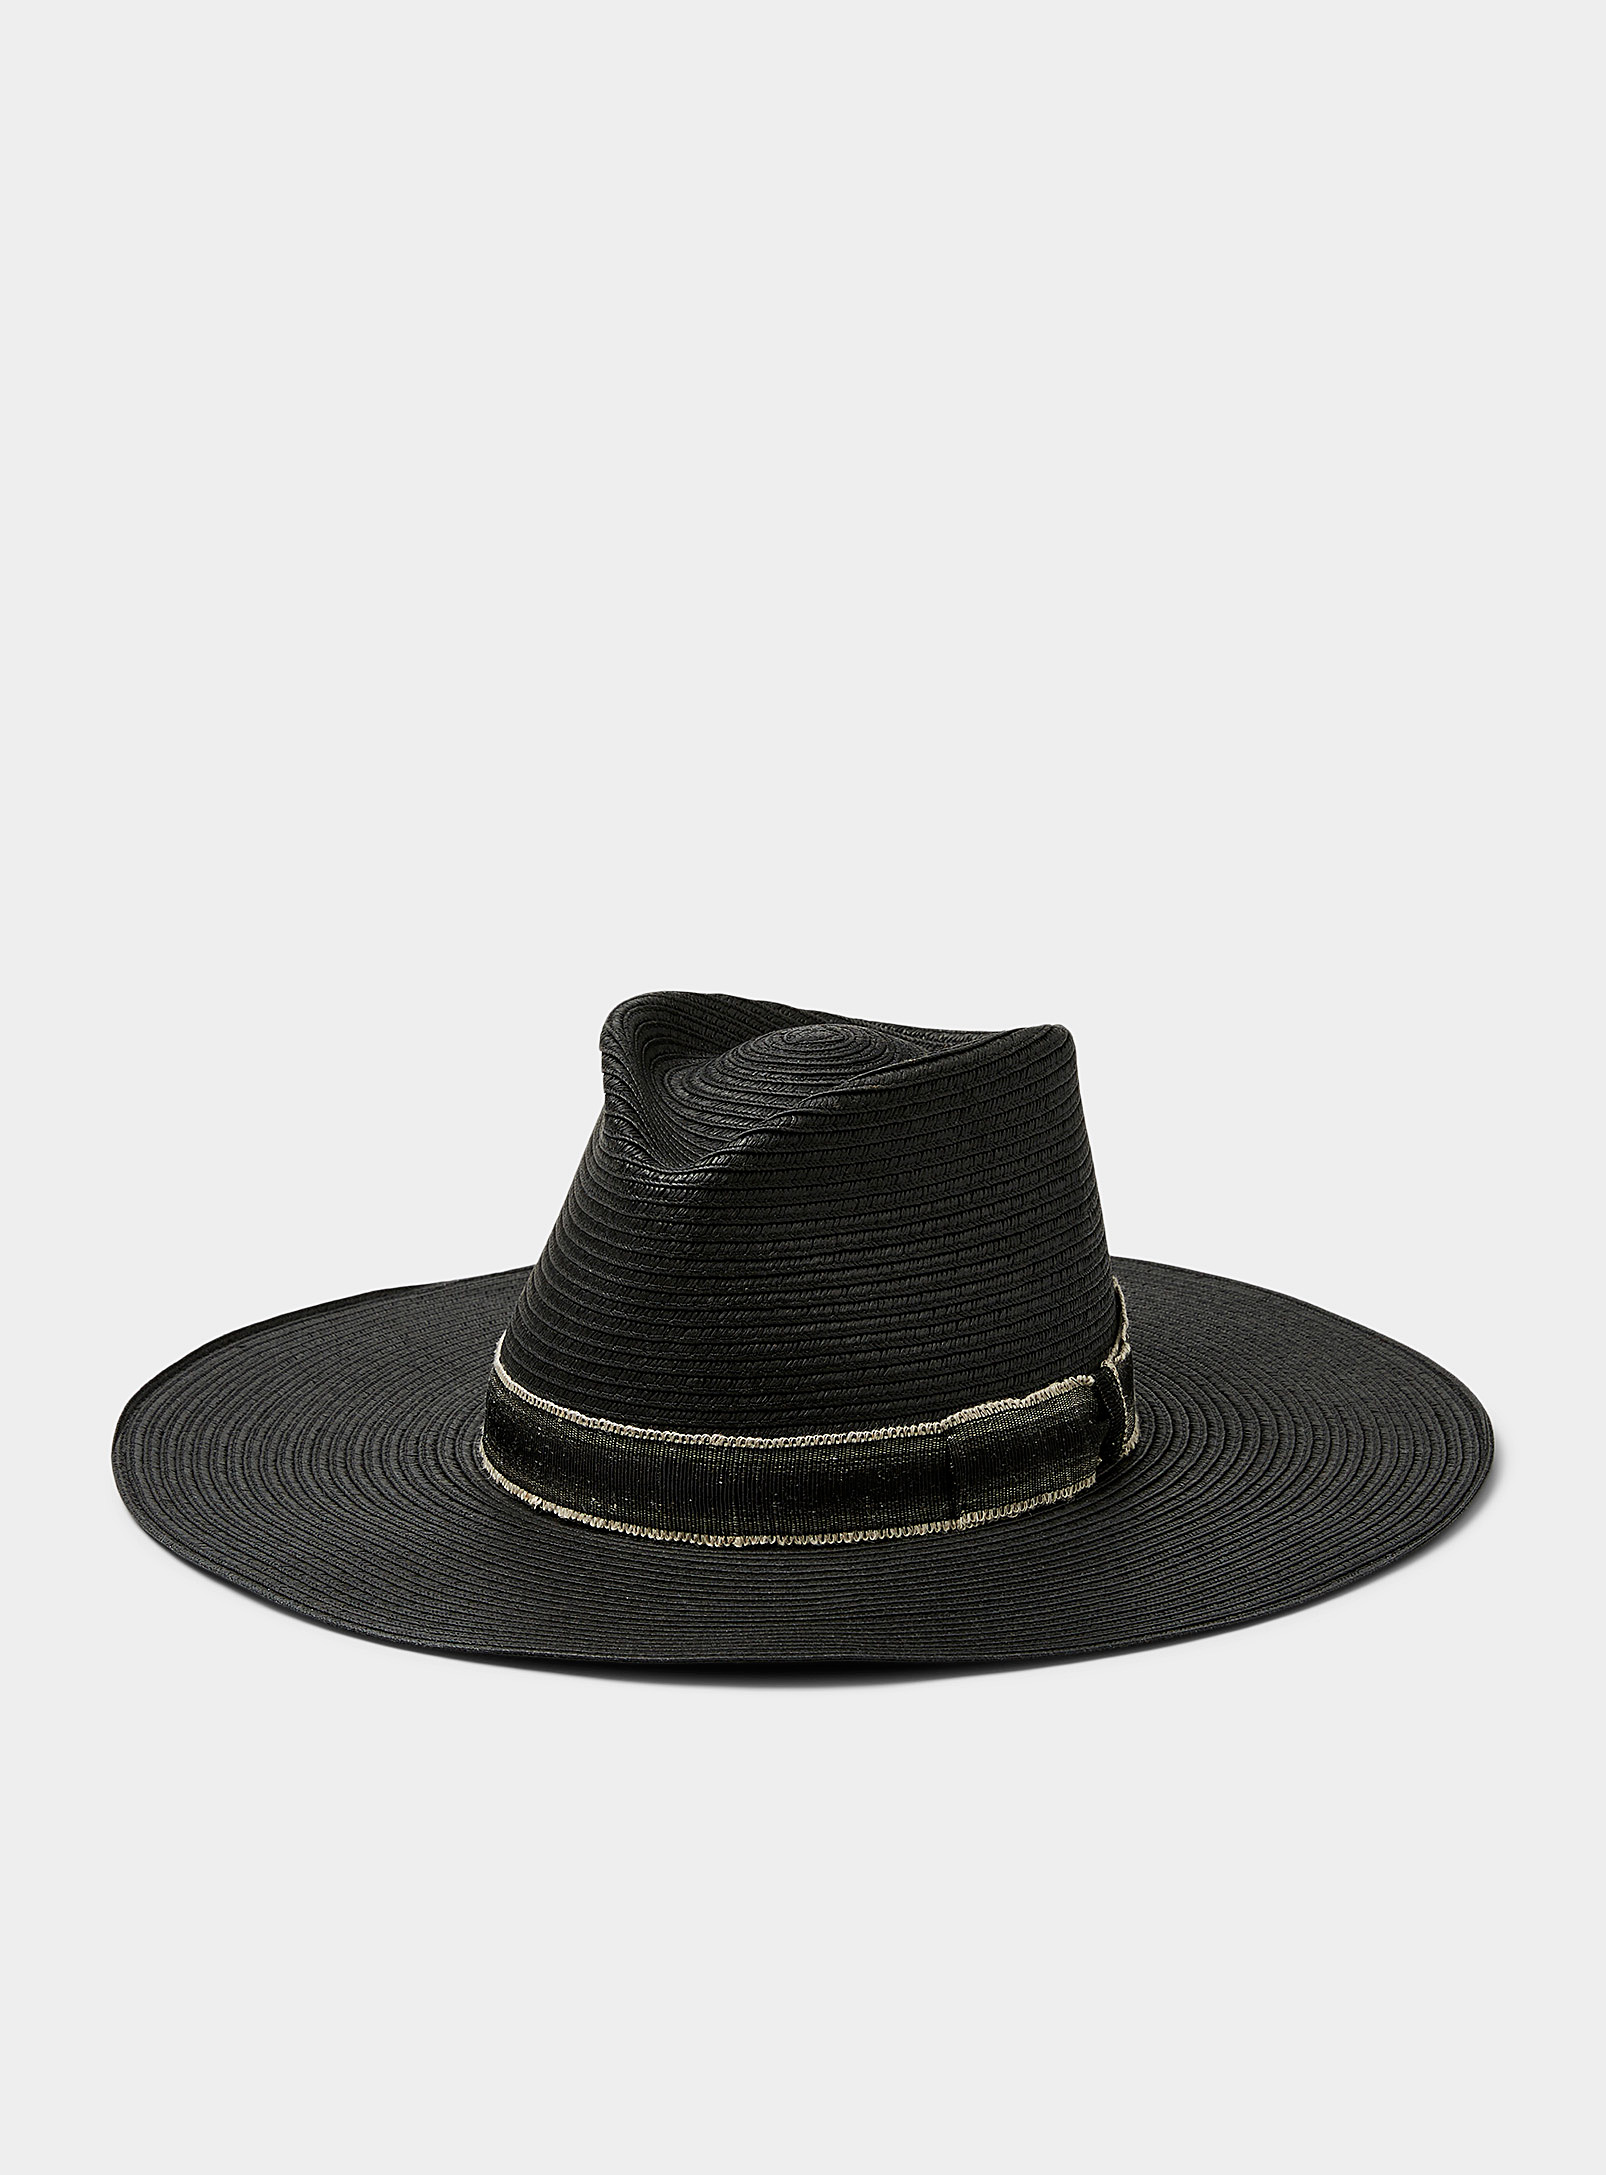 Le 31 - Men's Raw-like band black Panama hat